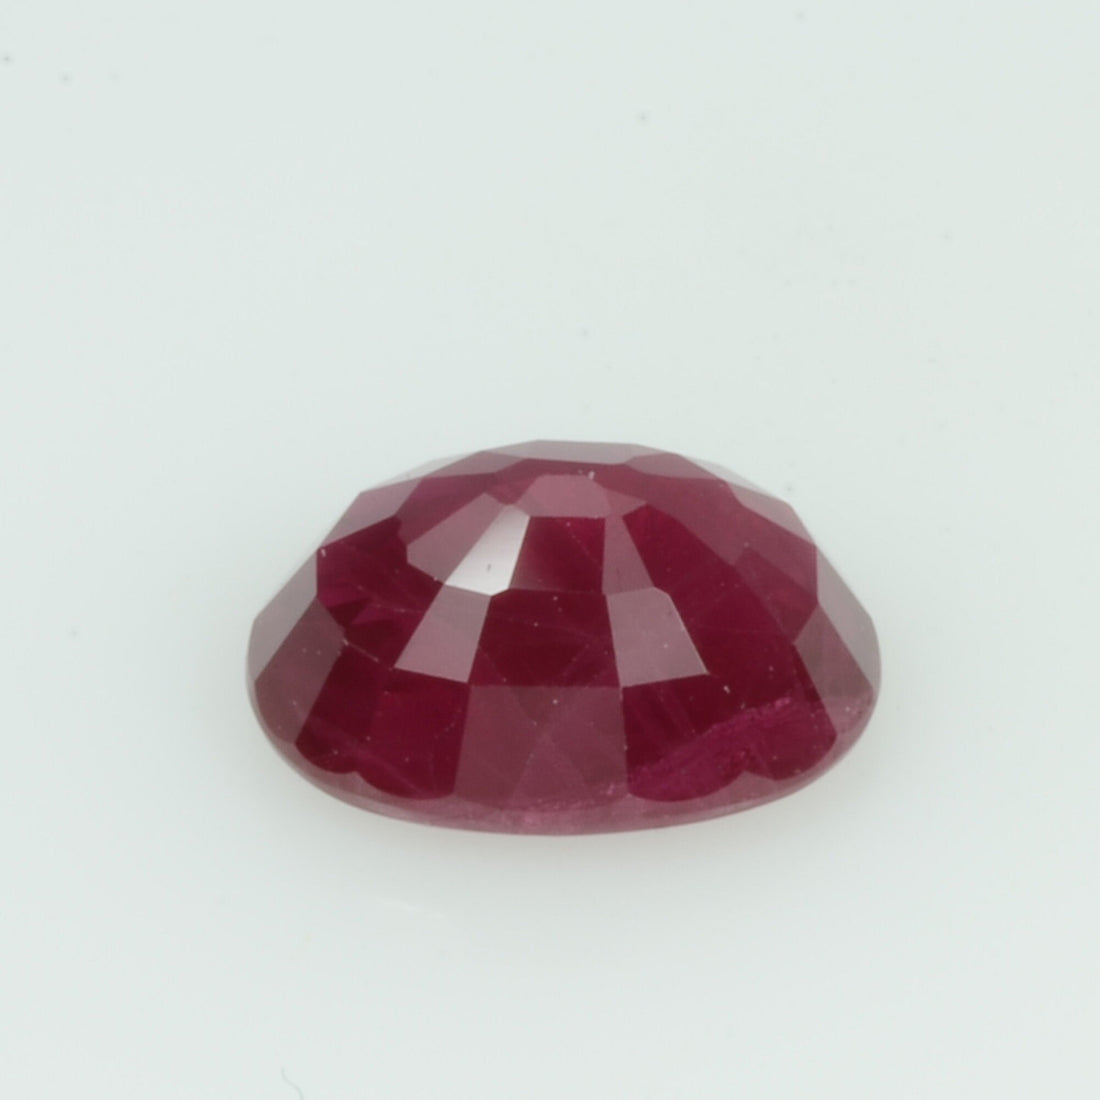 1.09 Cts Natural Burma Ruby Loose Gemstone Oval Cut